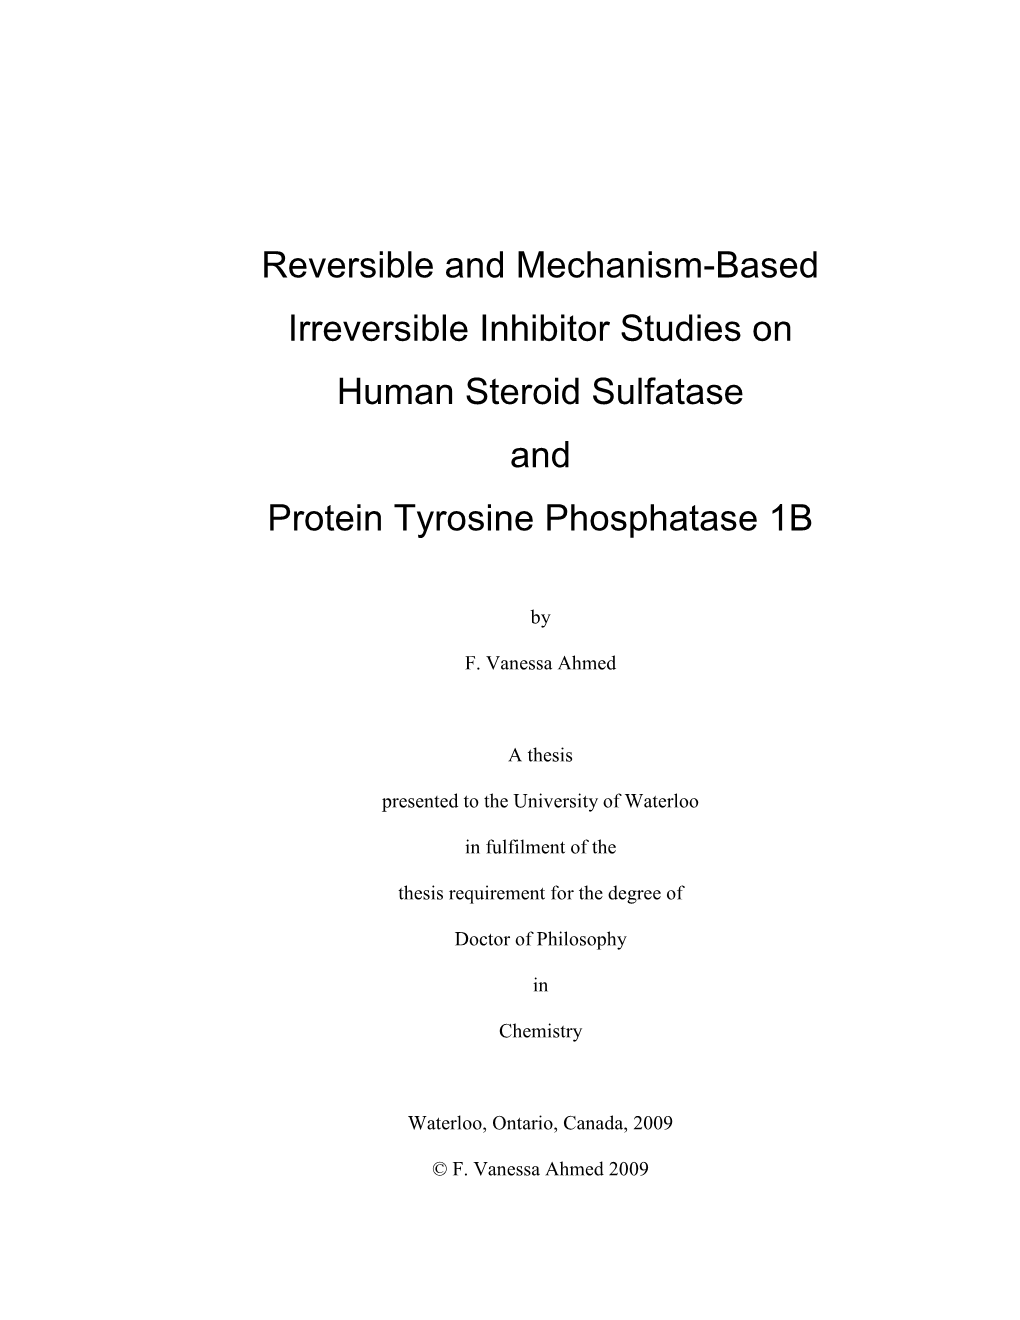 Reversible and Mechanism-Based Irreversible Inhibitor Studies on Human Steroid Sulfatase and Protein Tyrosine Phosphatase 1B